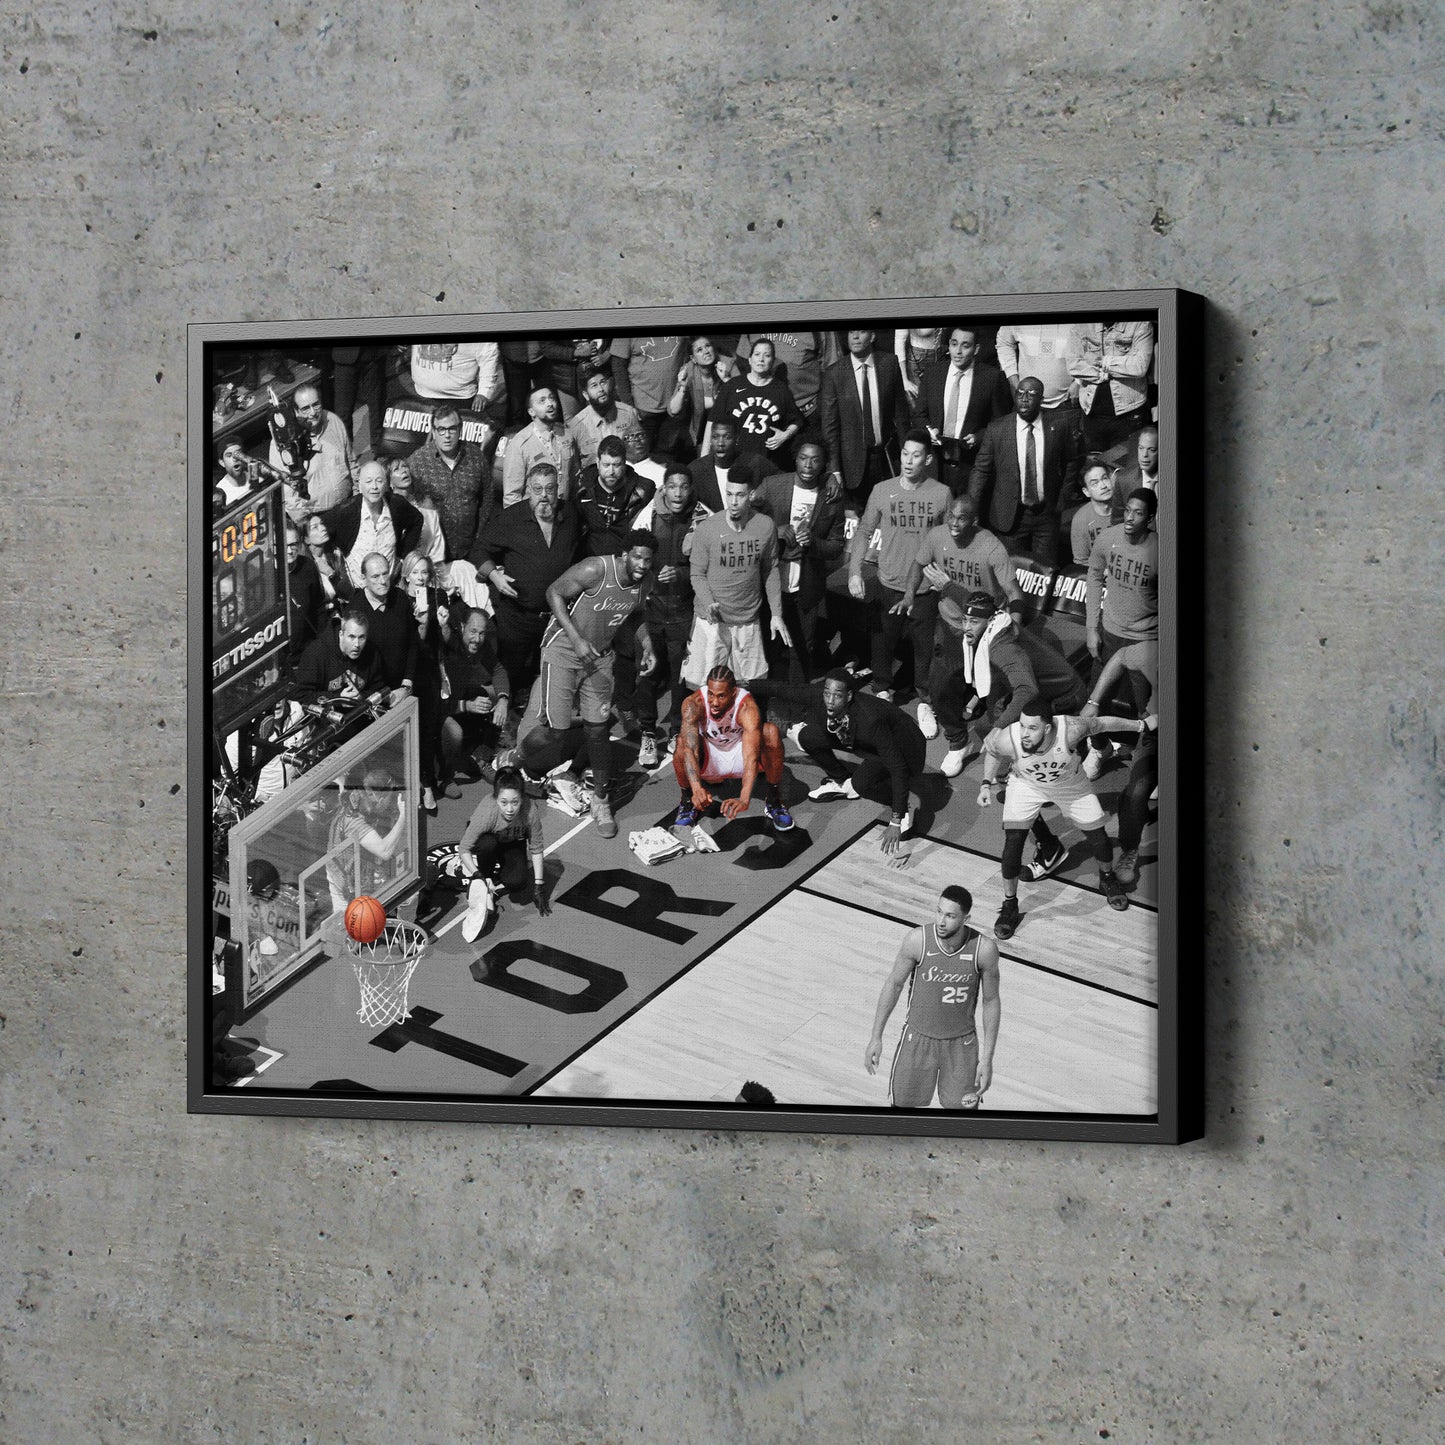 Kawhi Leonard Buzzer Beater Game 7 Poster Toronto Raptors Basketball Hand Made Posters Canvas Print Wall Art Home Decor